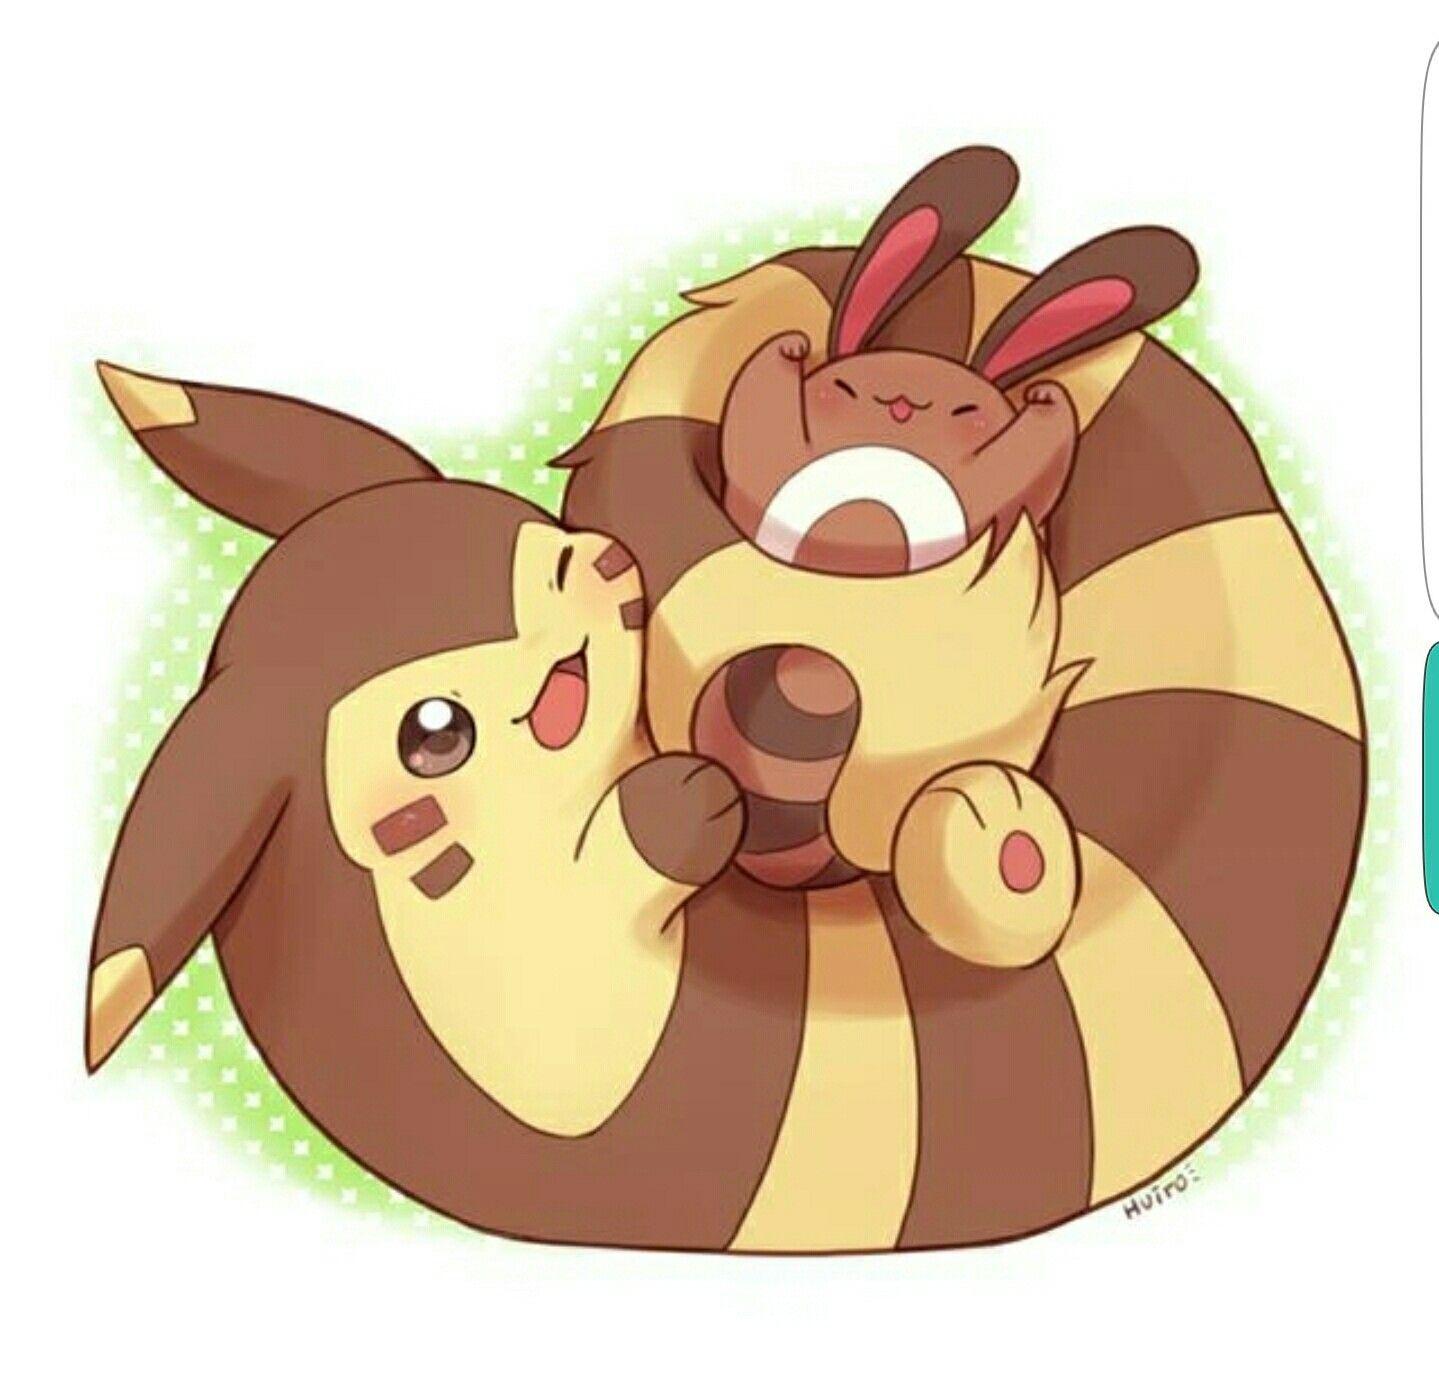 Furret, Sentret, cute; Pokémon. Pokémon ポケモン